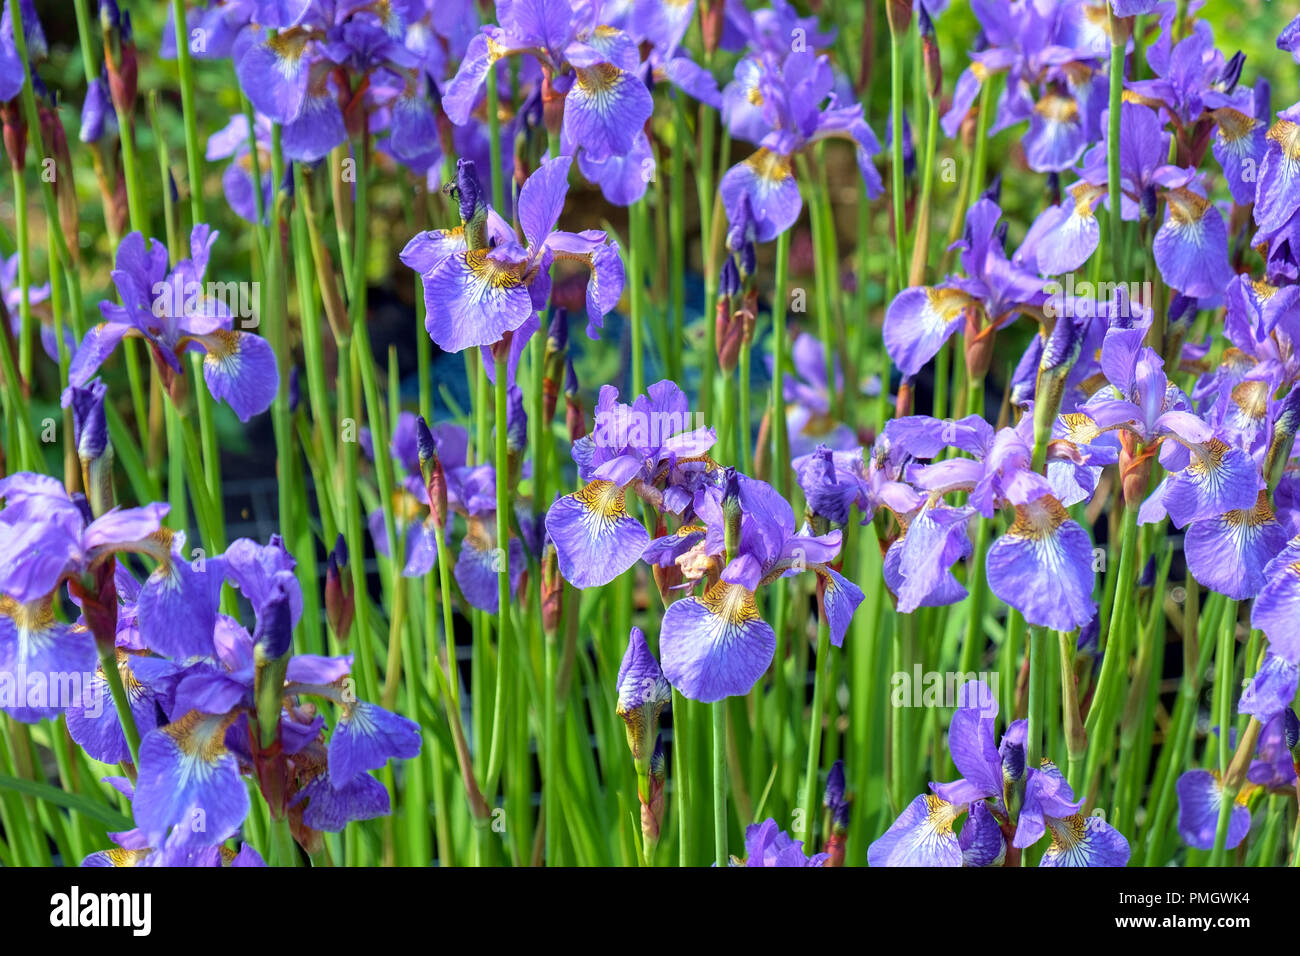 A mass of mauve iris flowers in a garden flowerbed. Stock Photo